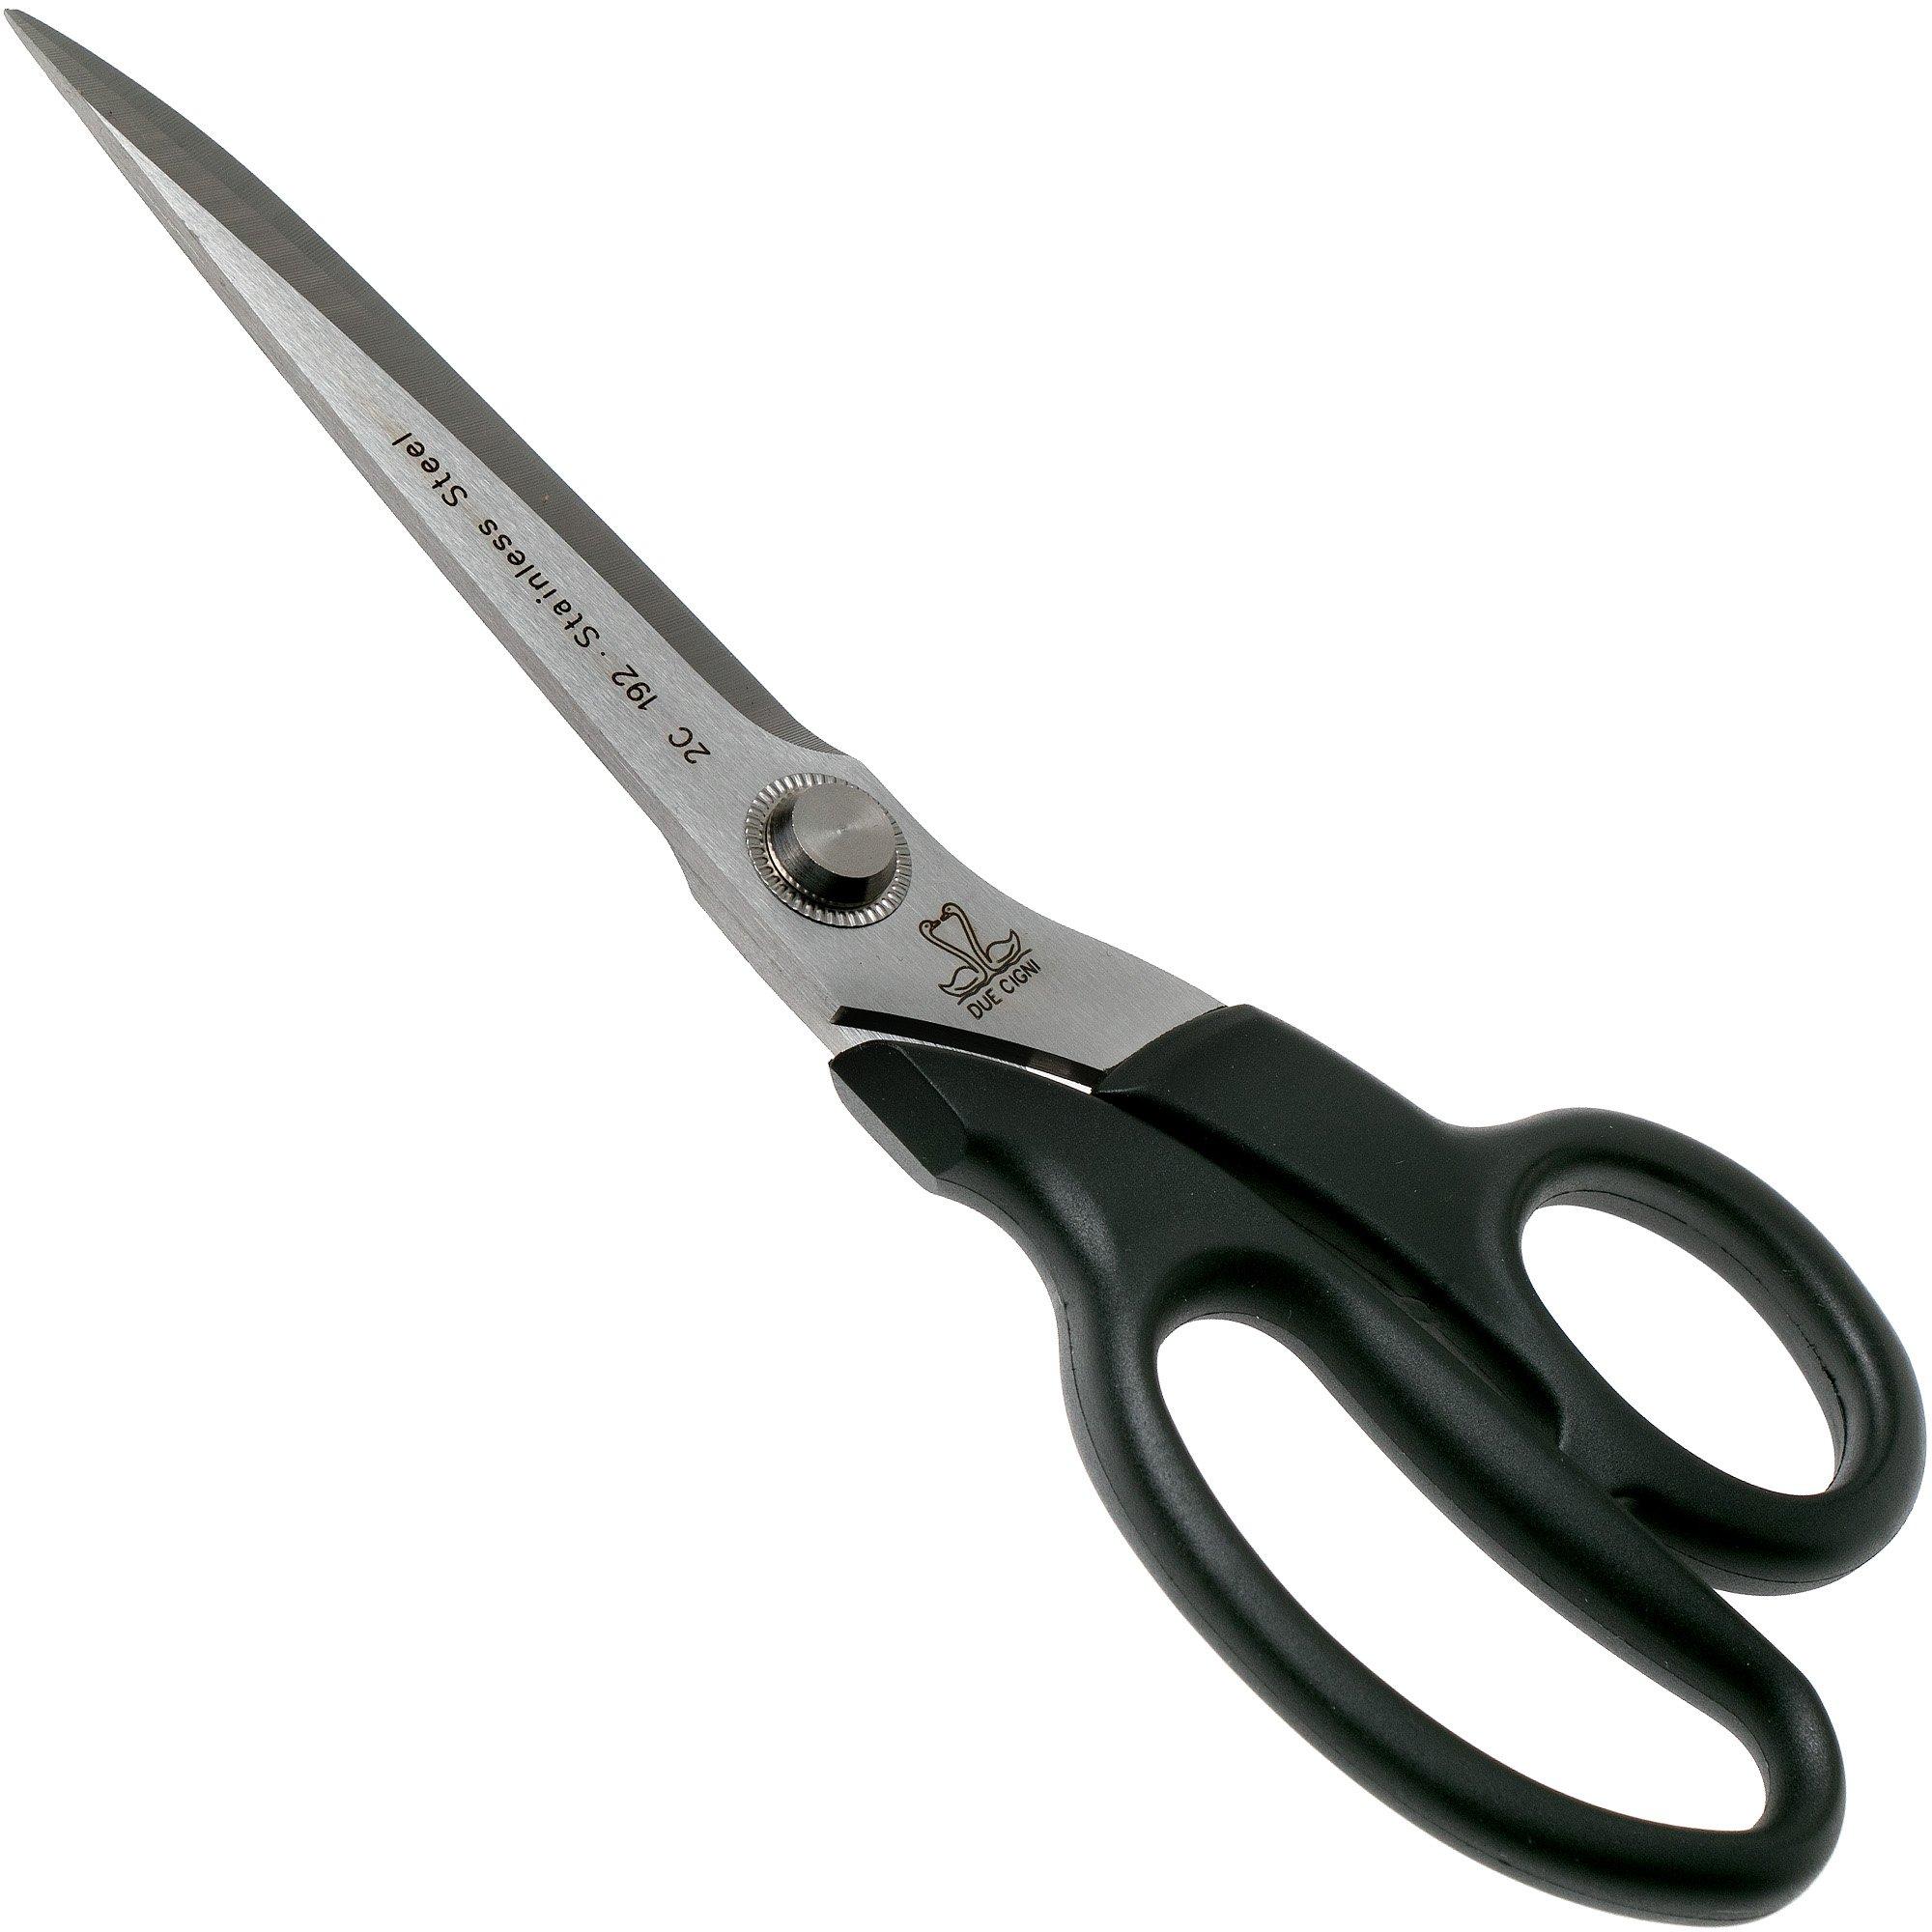 Victorinox 8.0908.21L household scissors 21 cm left-handed